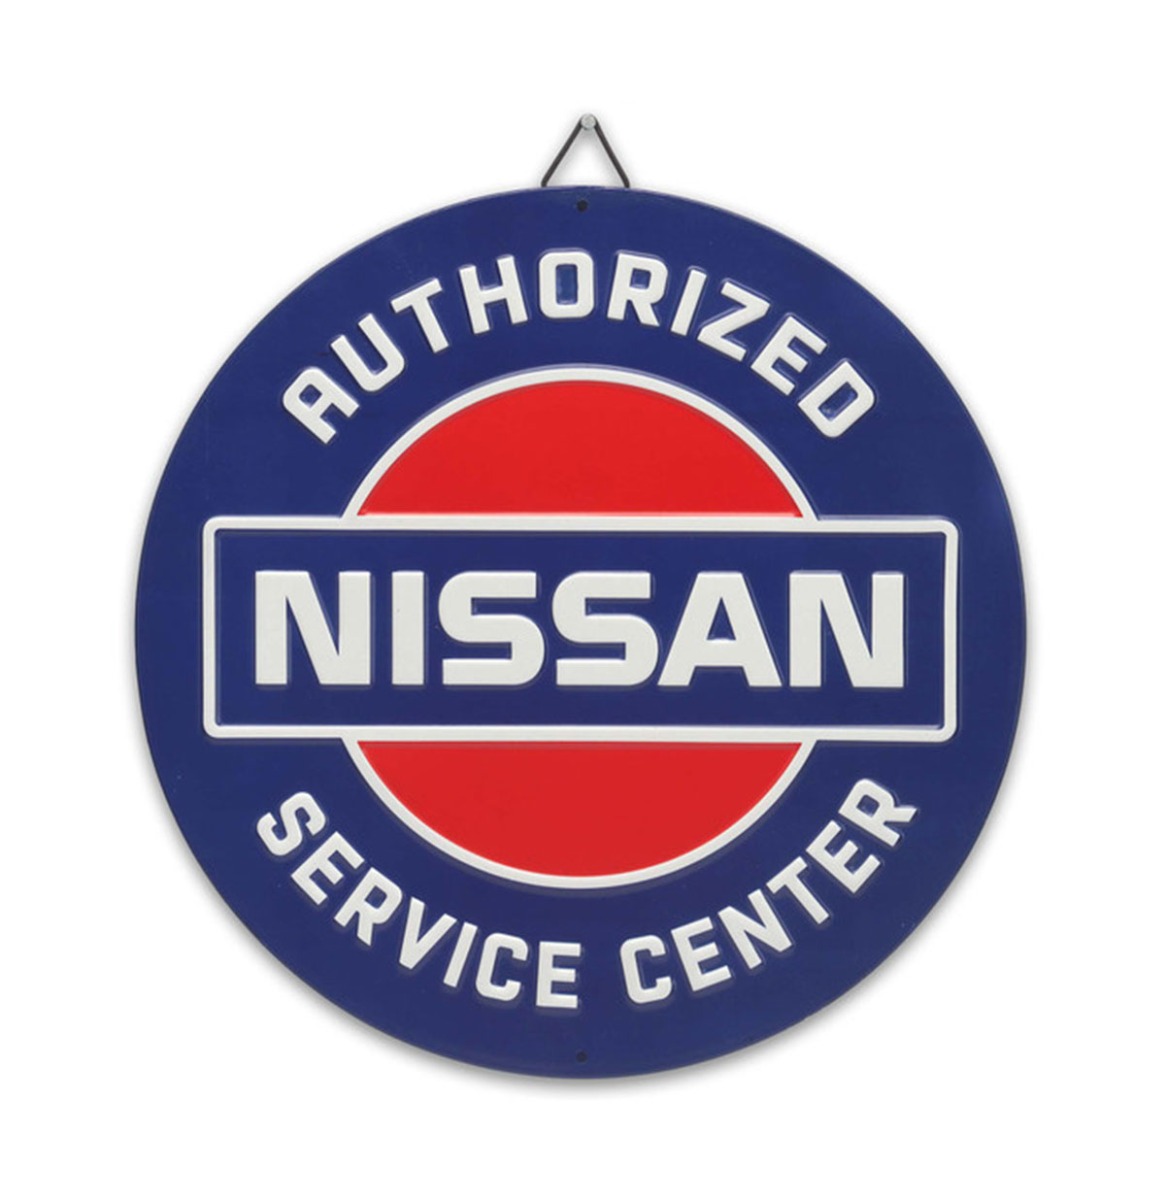 Fiftiesstore Nissan Authorized Service Center Metalen Bord - Ø31cm